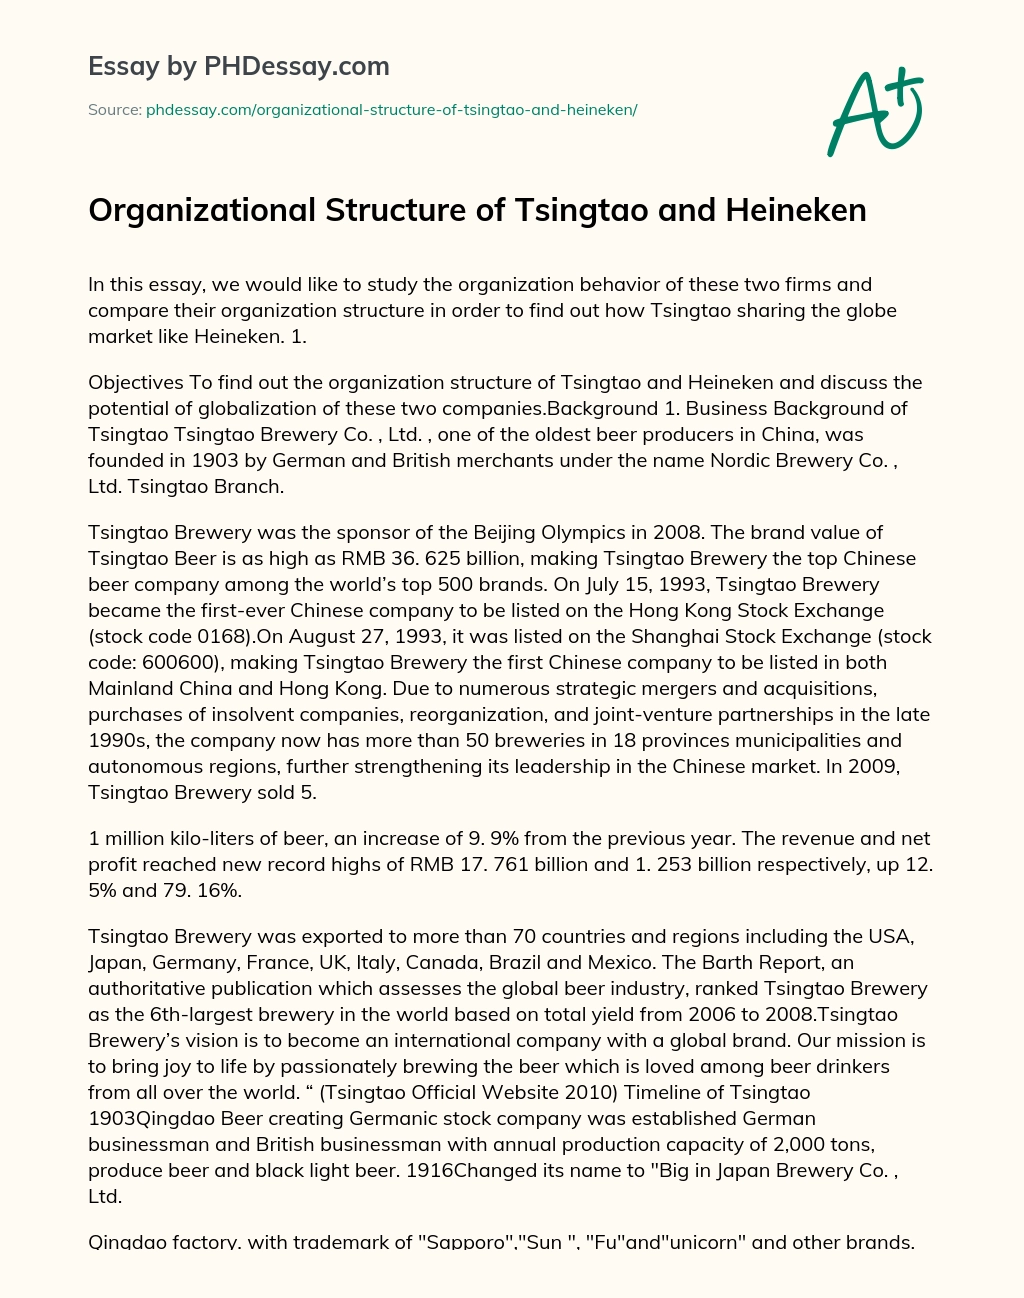 Organizational Structure of Tsingtao and Heineken essay